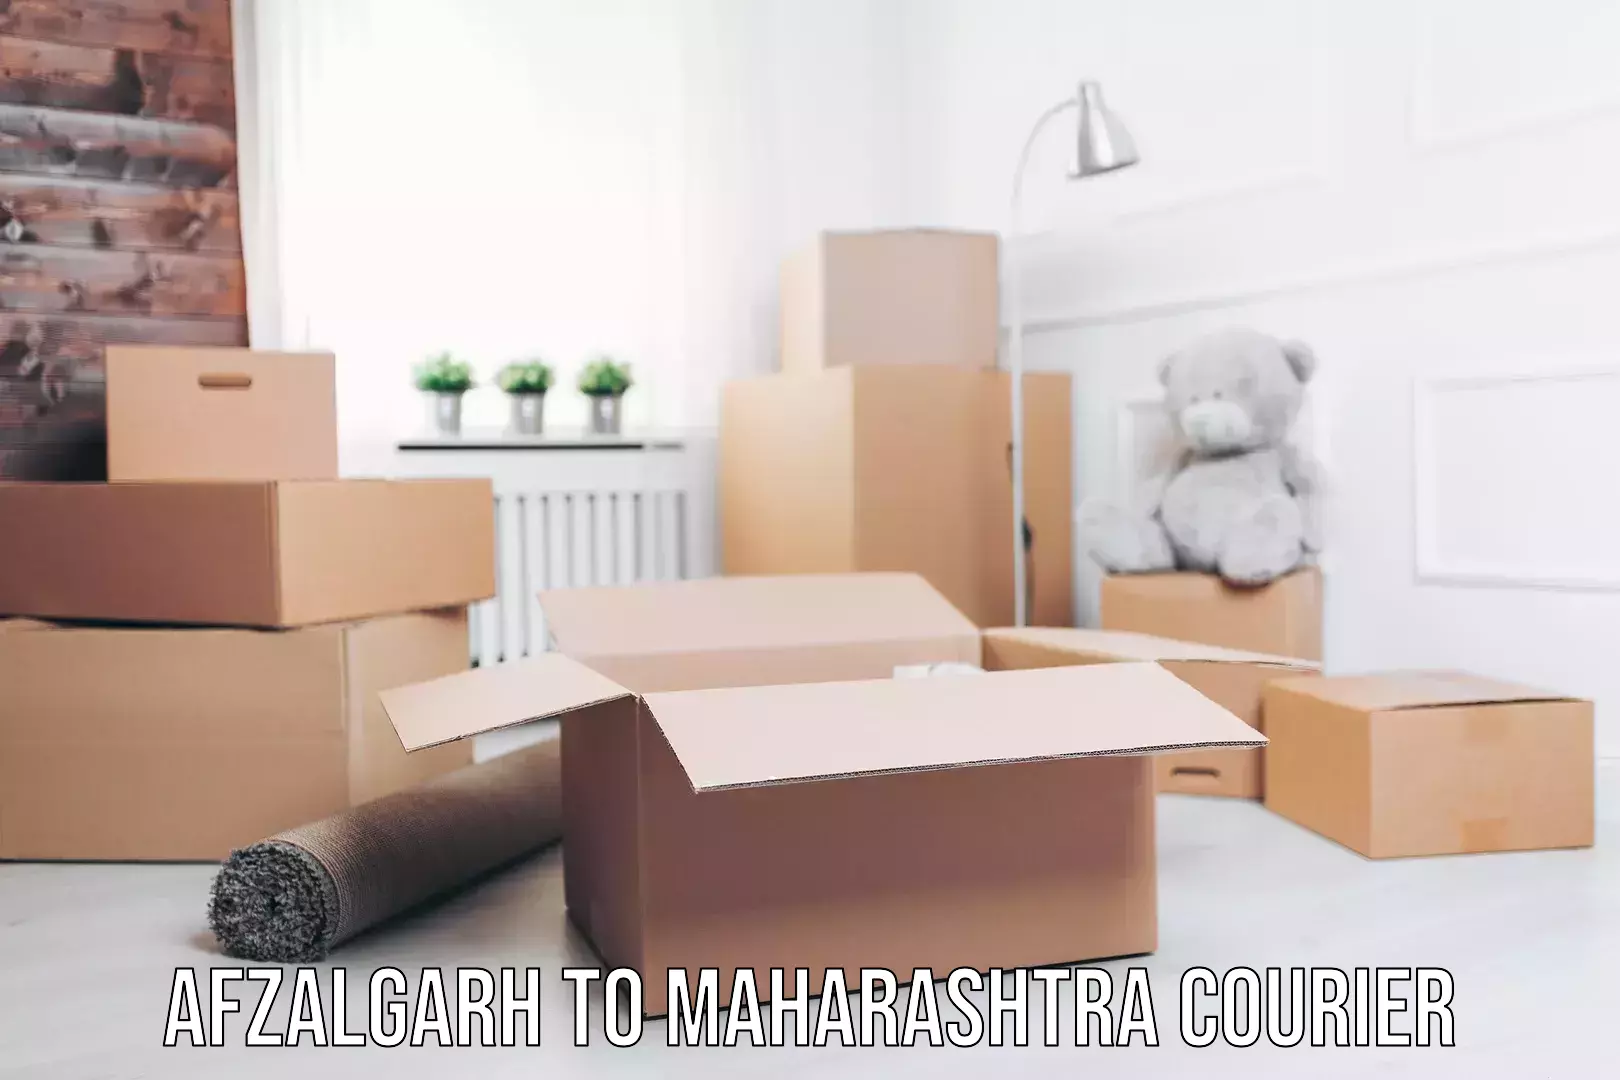 Efficient order fulfillment in Afzalgarh to Maharashtra